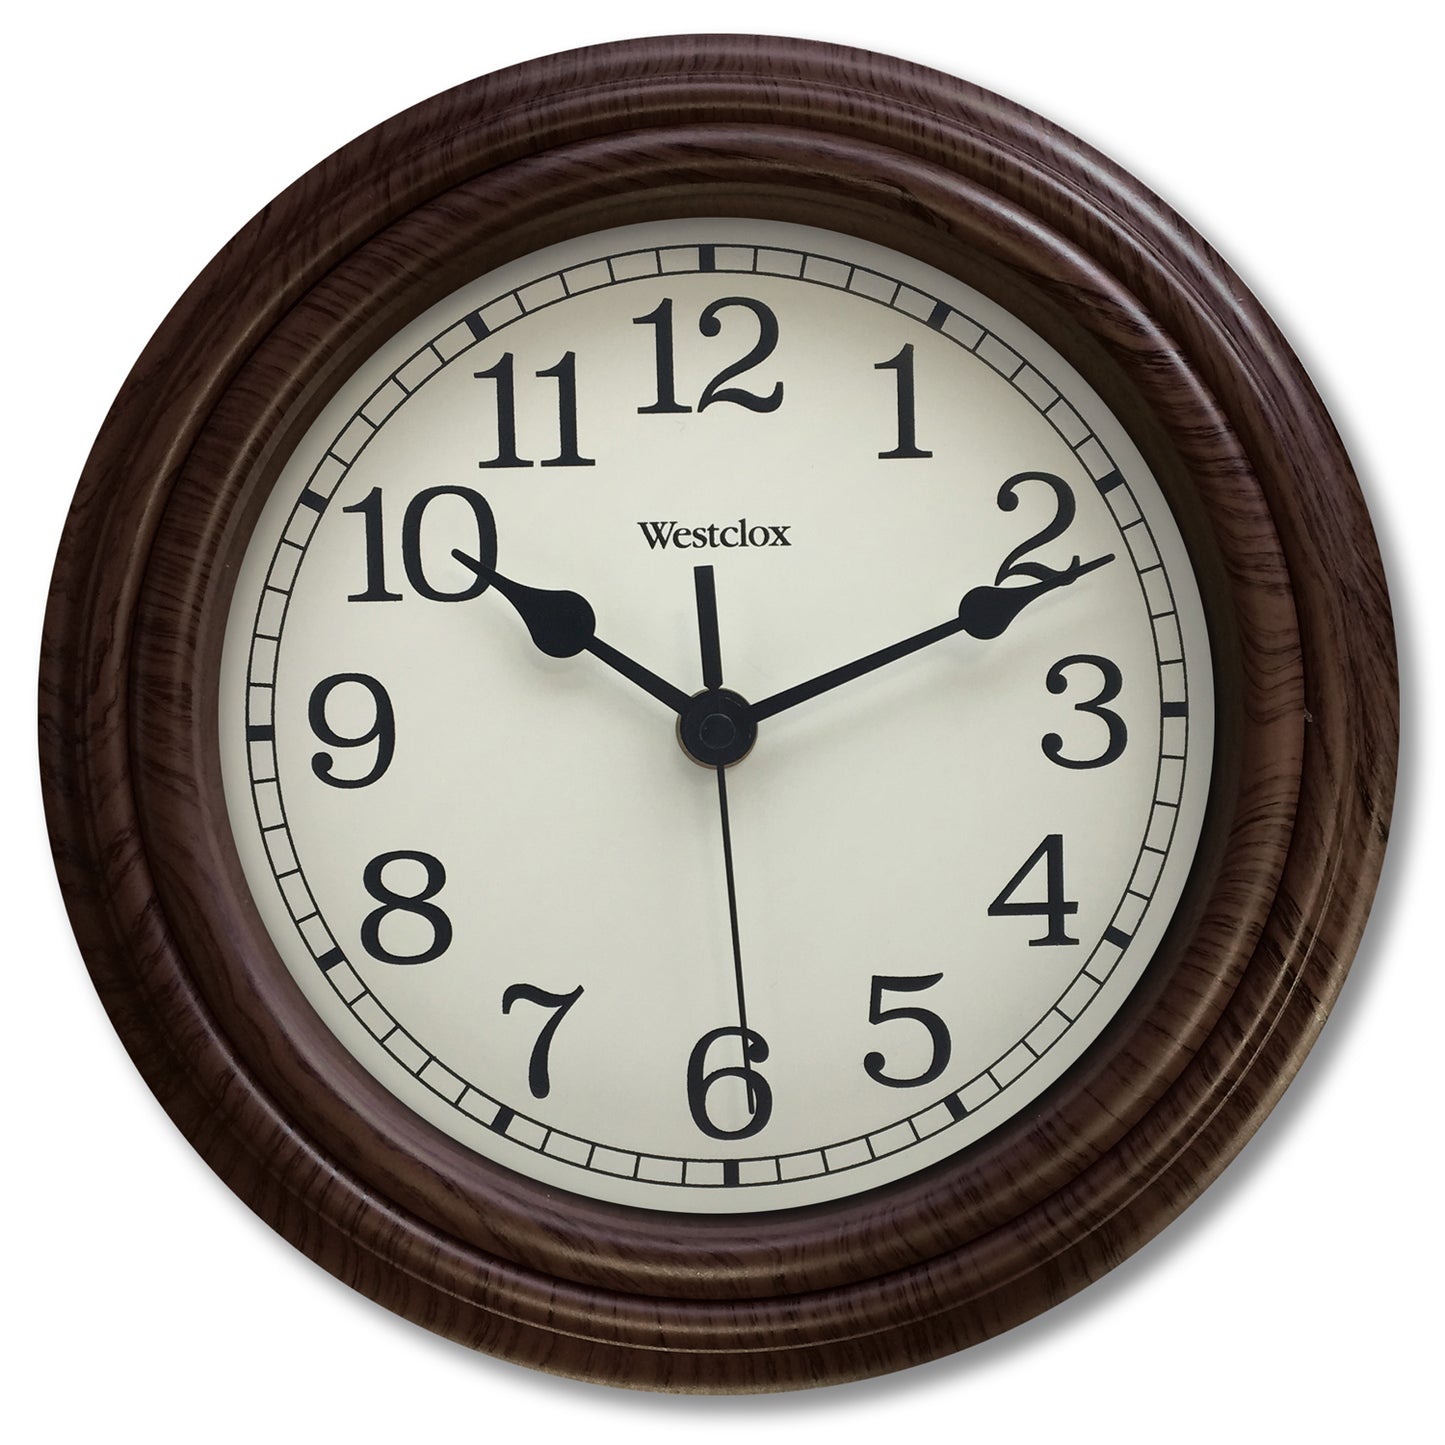 Wesclox plastic Realistic woodgrain looking wall clock